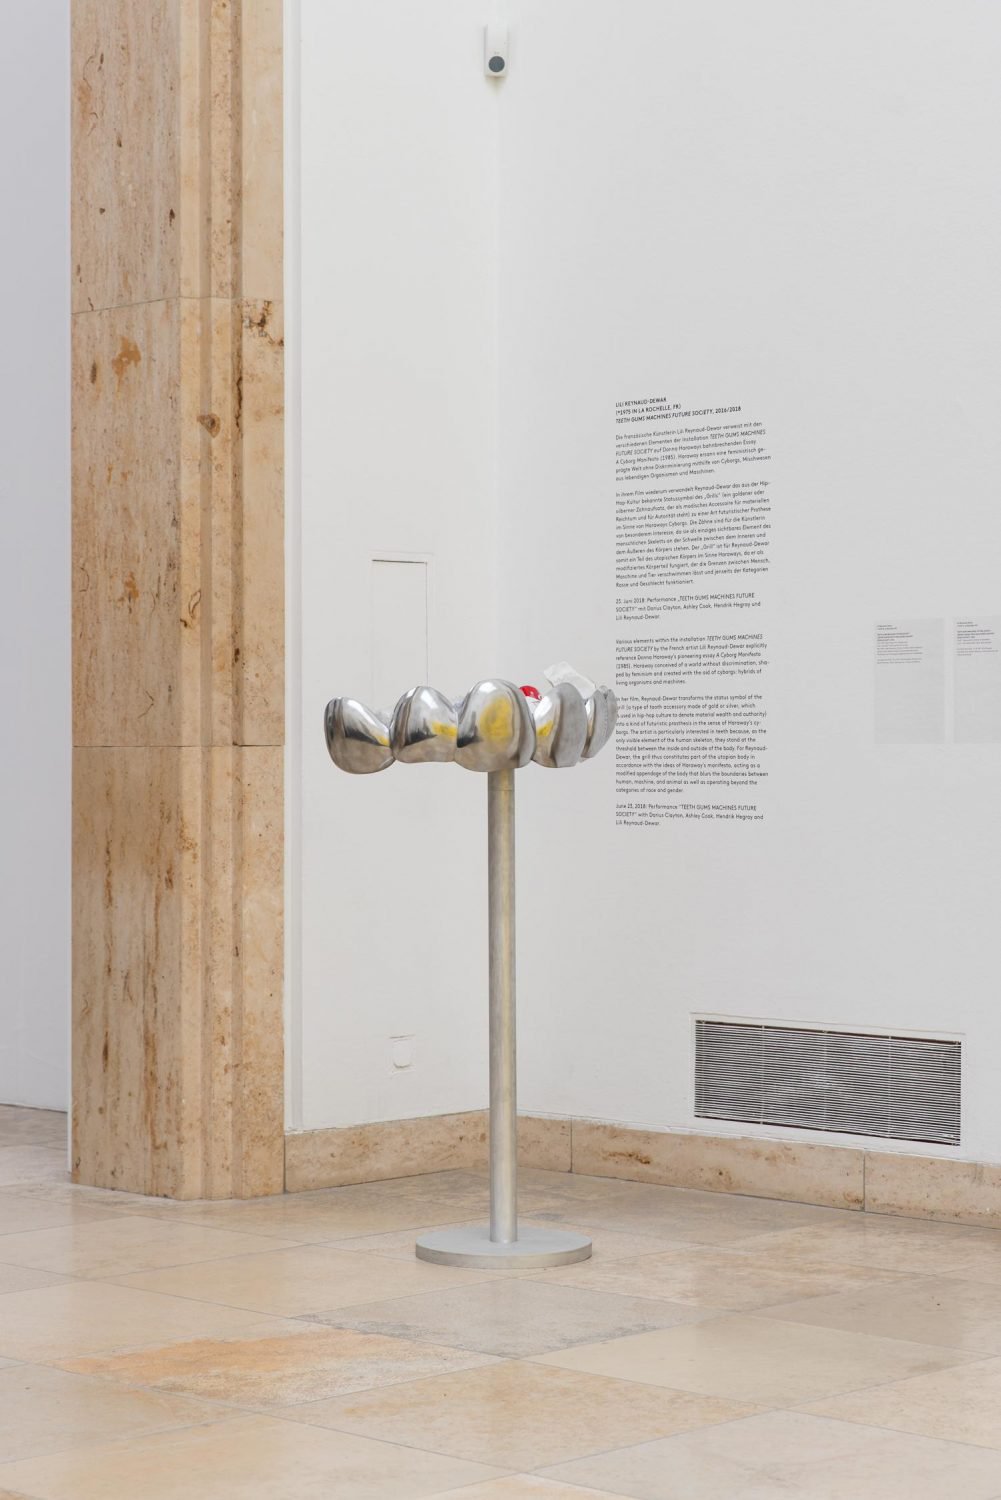 Lili Reynaud-DewarInstallation viewBlind Faith: Between the Visceral and the Cognitive in Contemporary Art, Haus der Kunst, Munich, 2018